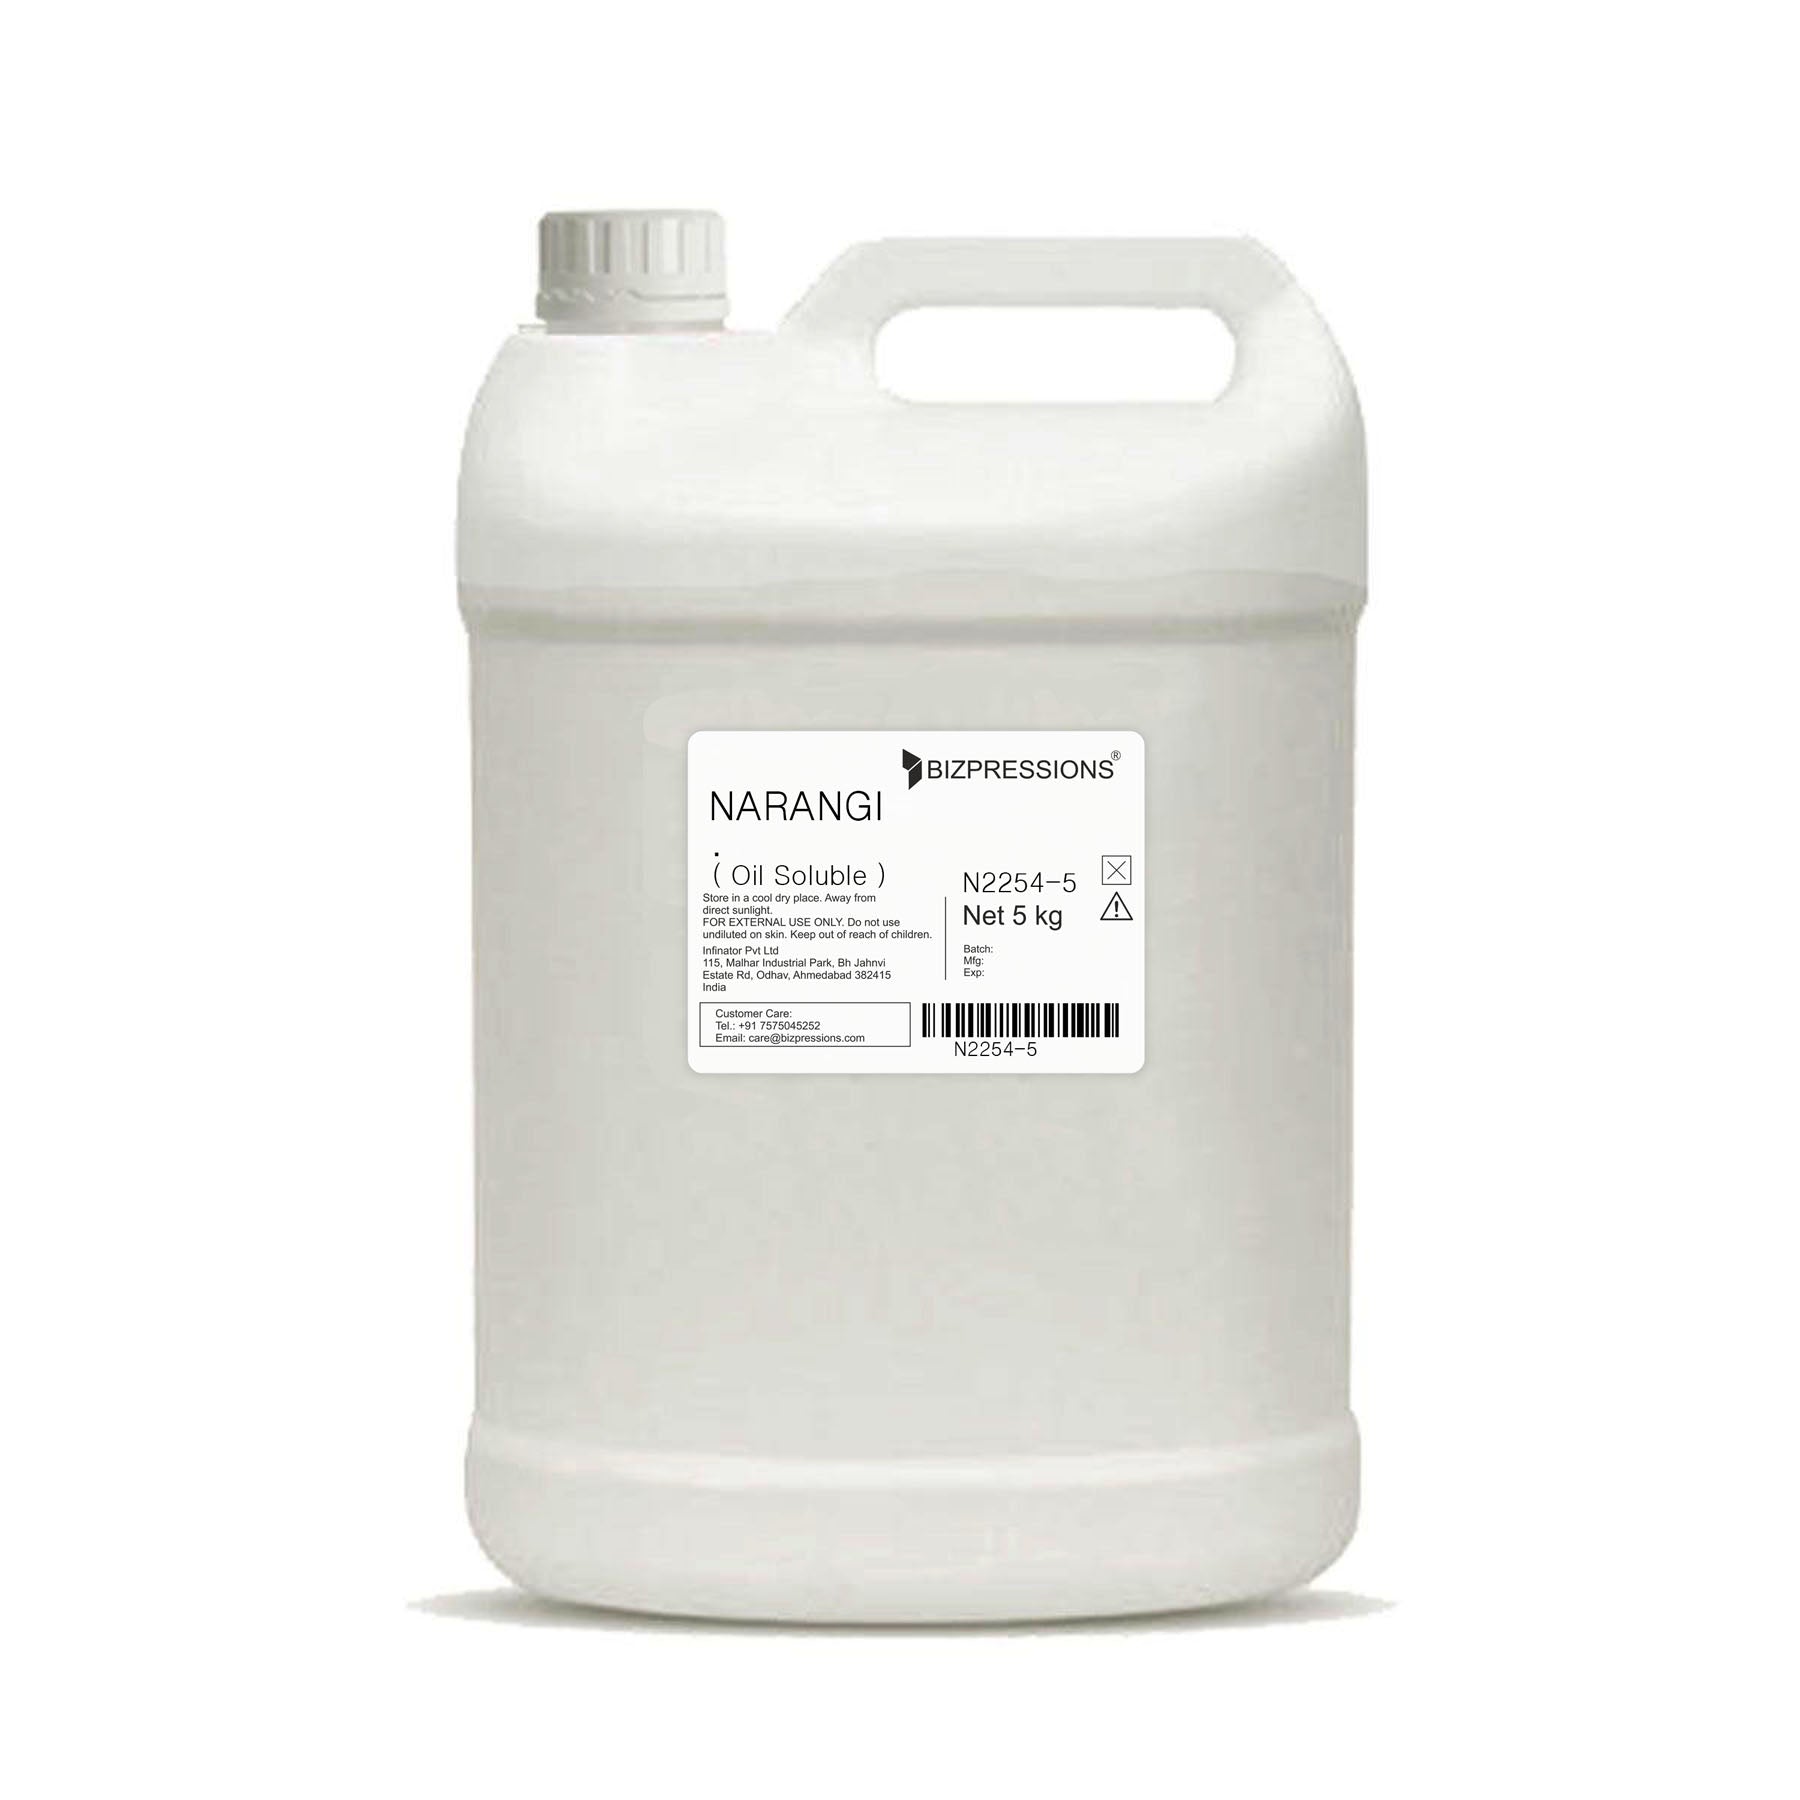 NARANGI - Fragrance ( Oil Soluble ) - 5 kg